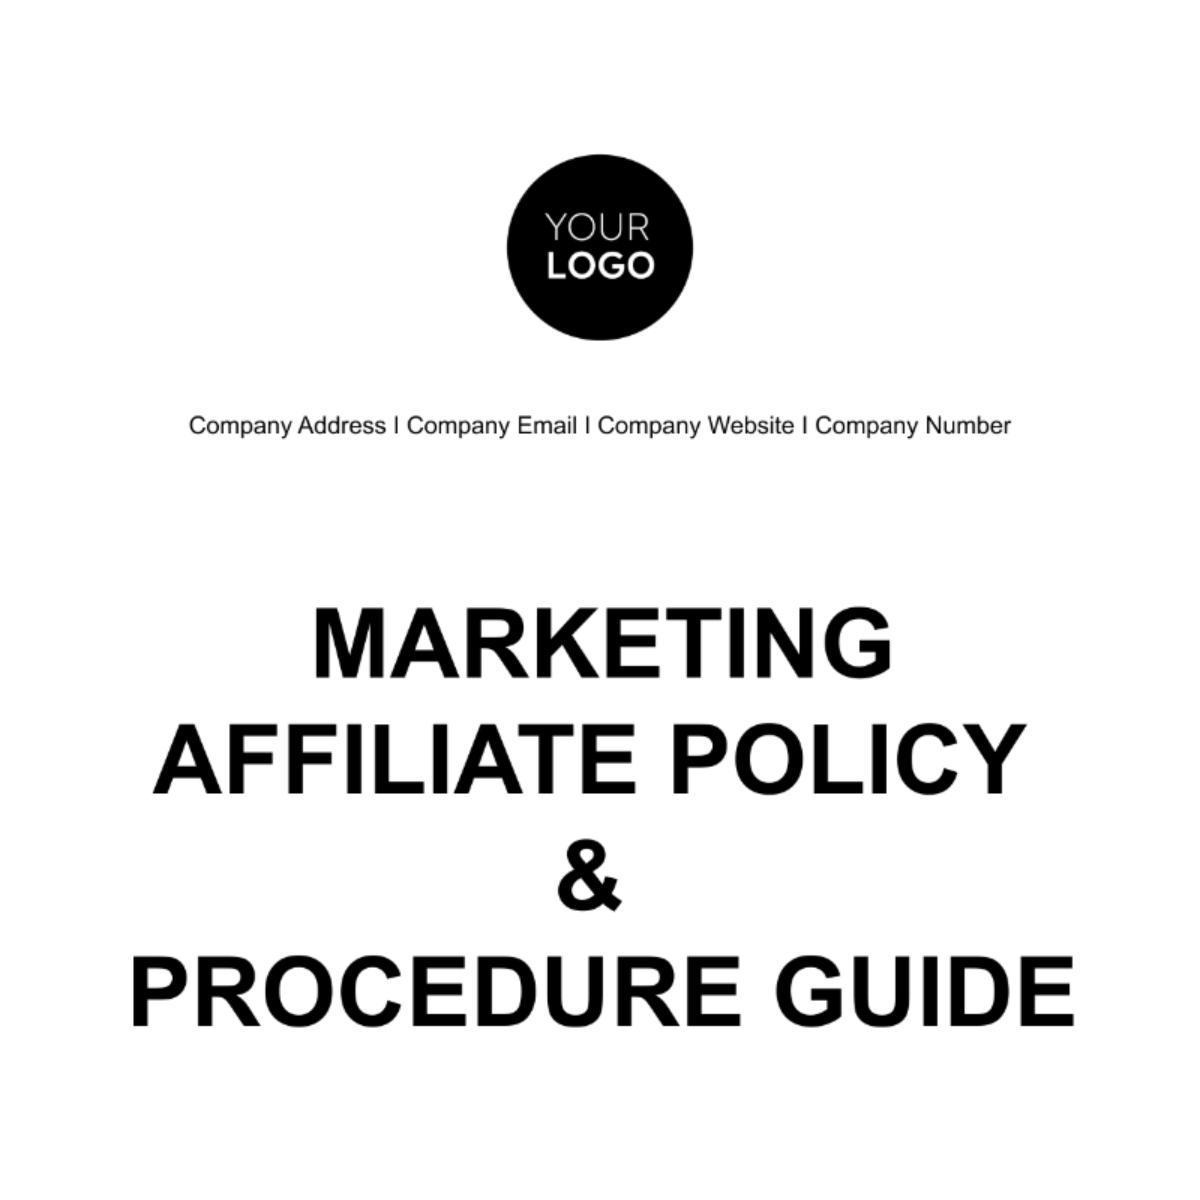 Marketing Affiliate Policy & Procedure Guide Template